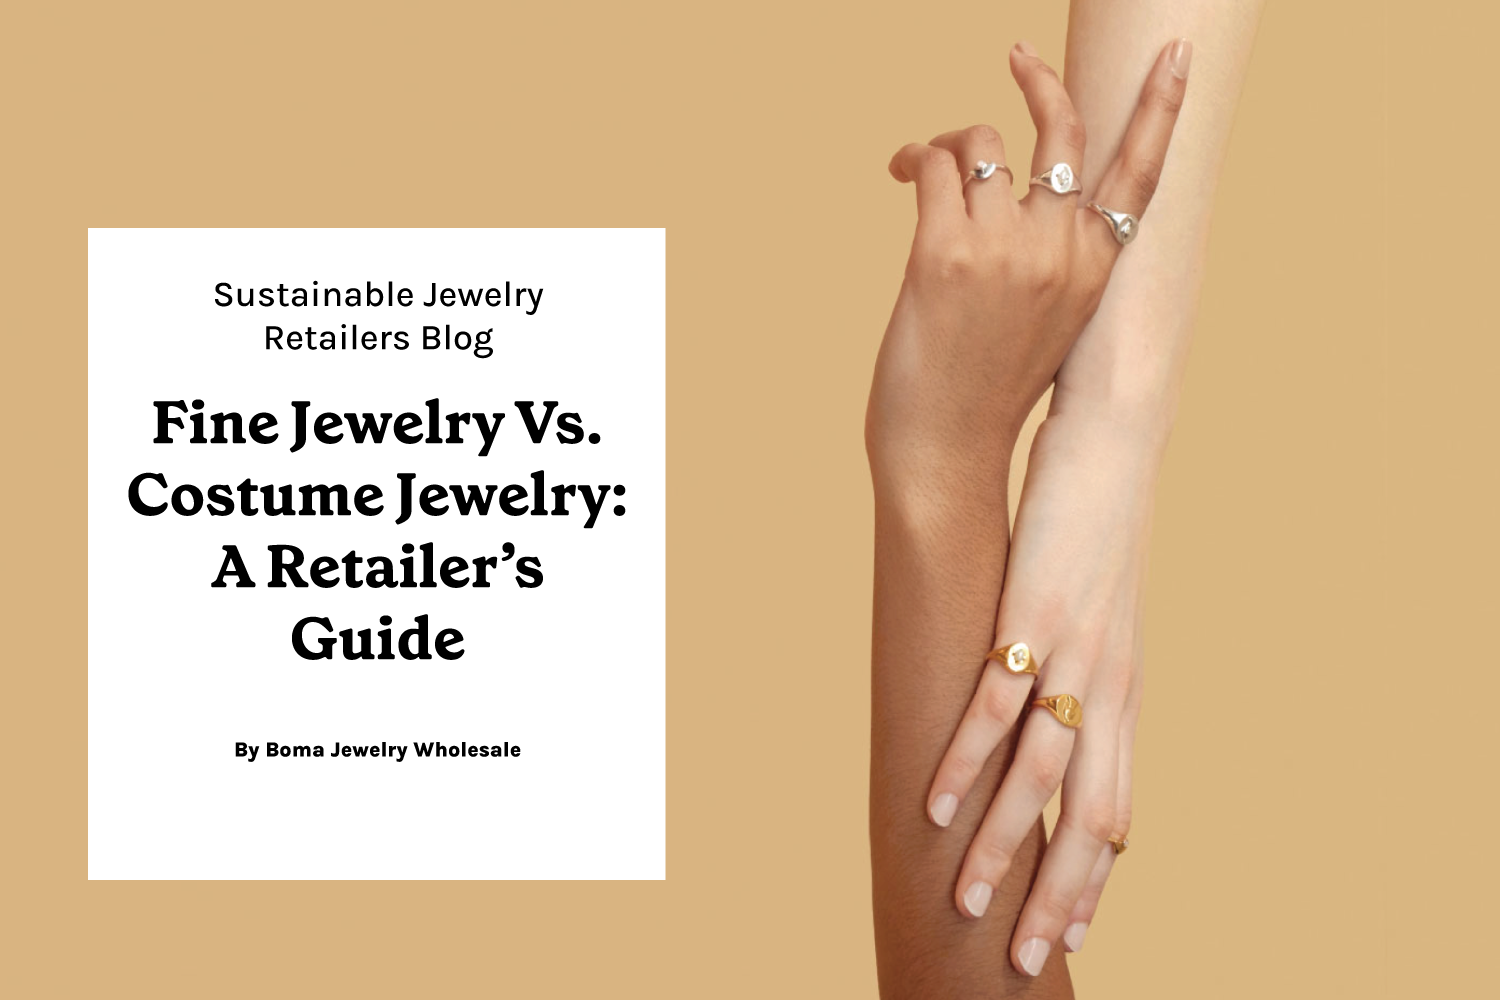 Boma Jewelry Wholesale Blog Fine vs Costume Jewelry Guide